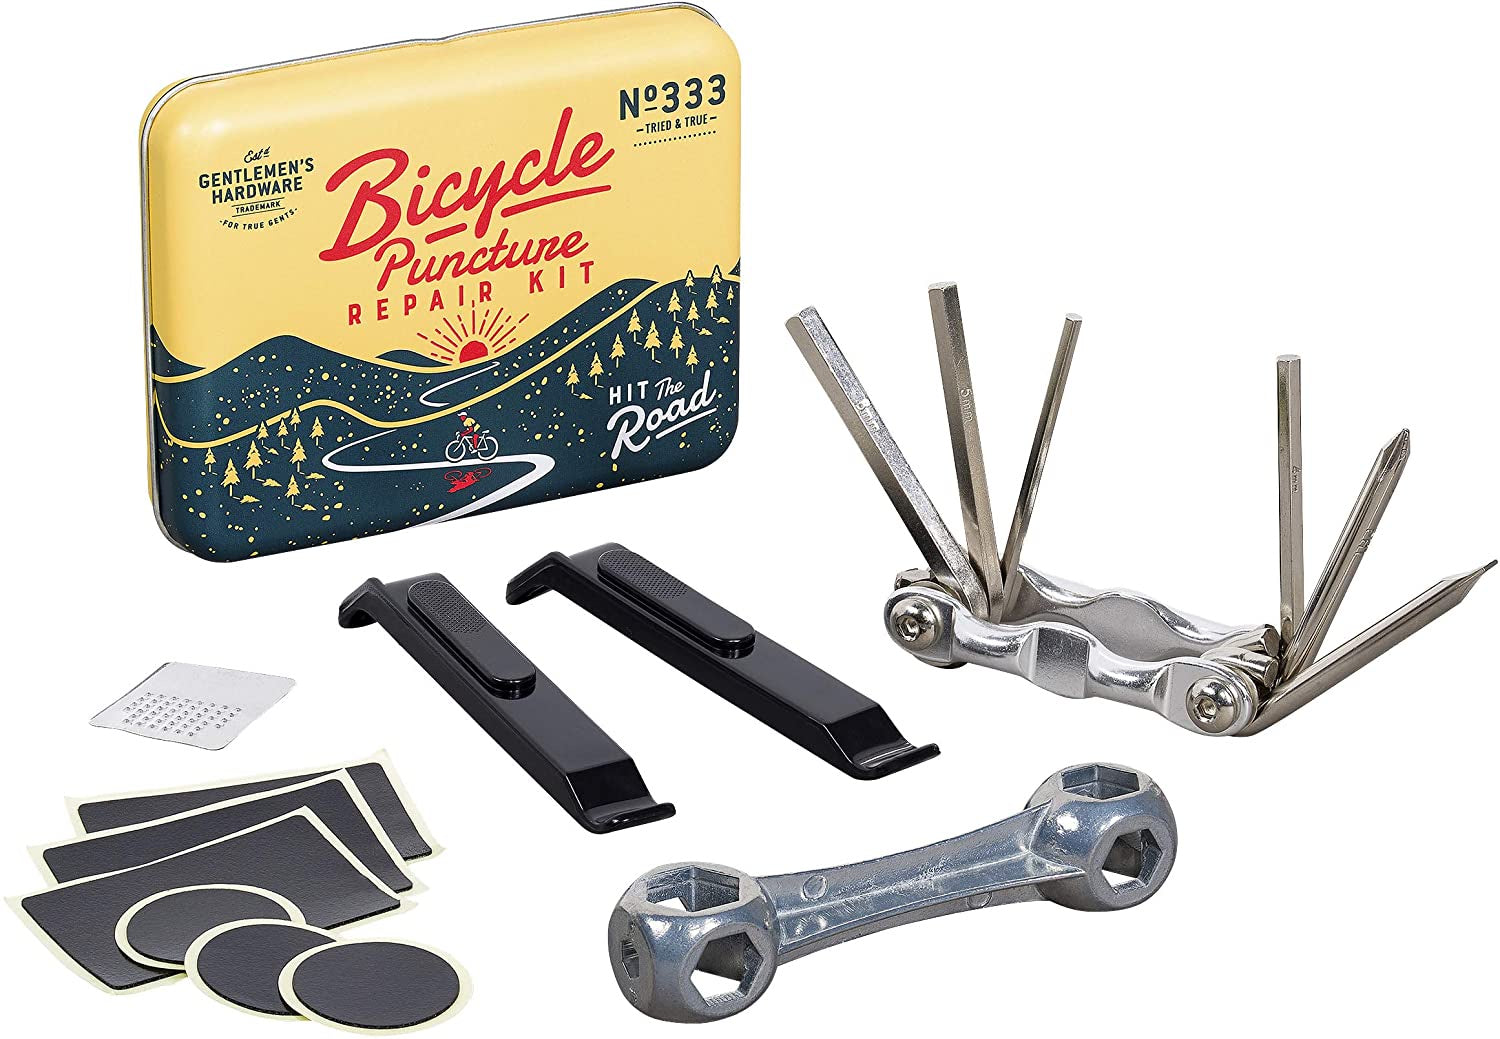 Gentlemen's Hardware Bicycle Puncture Repair Kit